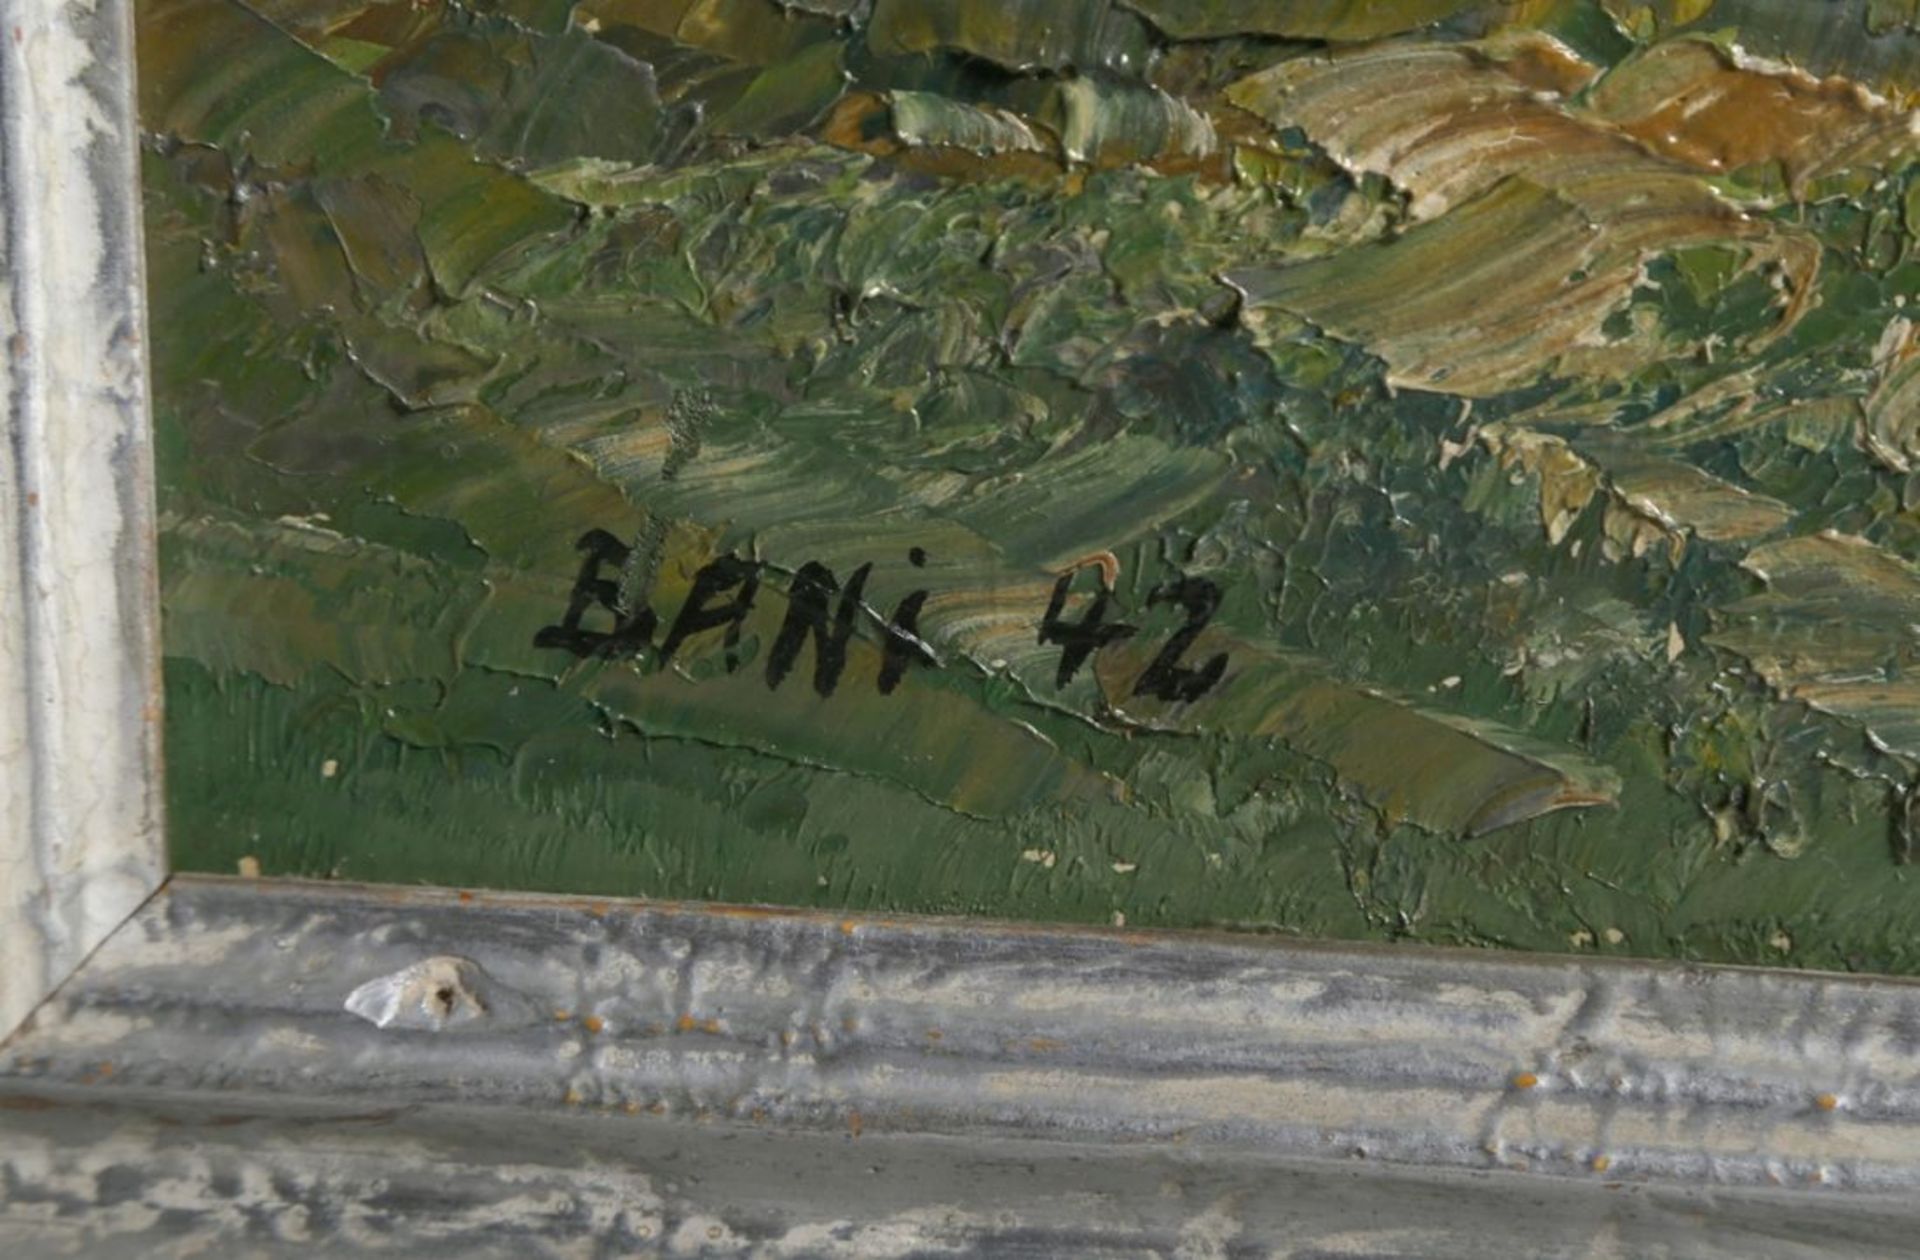 Bani, Maler 1. Hälfte 20. Jh. "Gebirgshof", sign., dat. 1942, Öl/Holz, 78 x 91 cm - Bild 2 aus 2